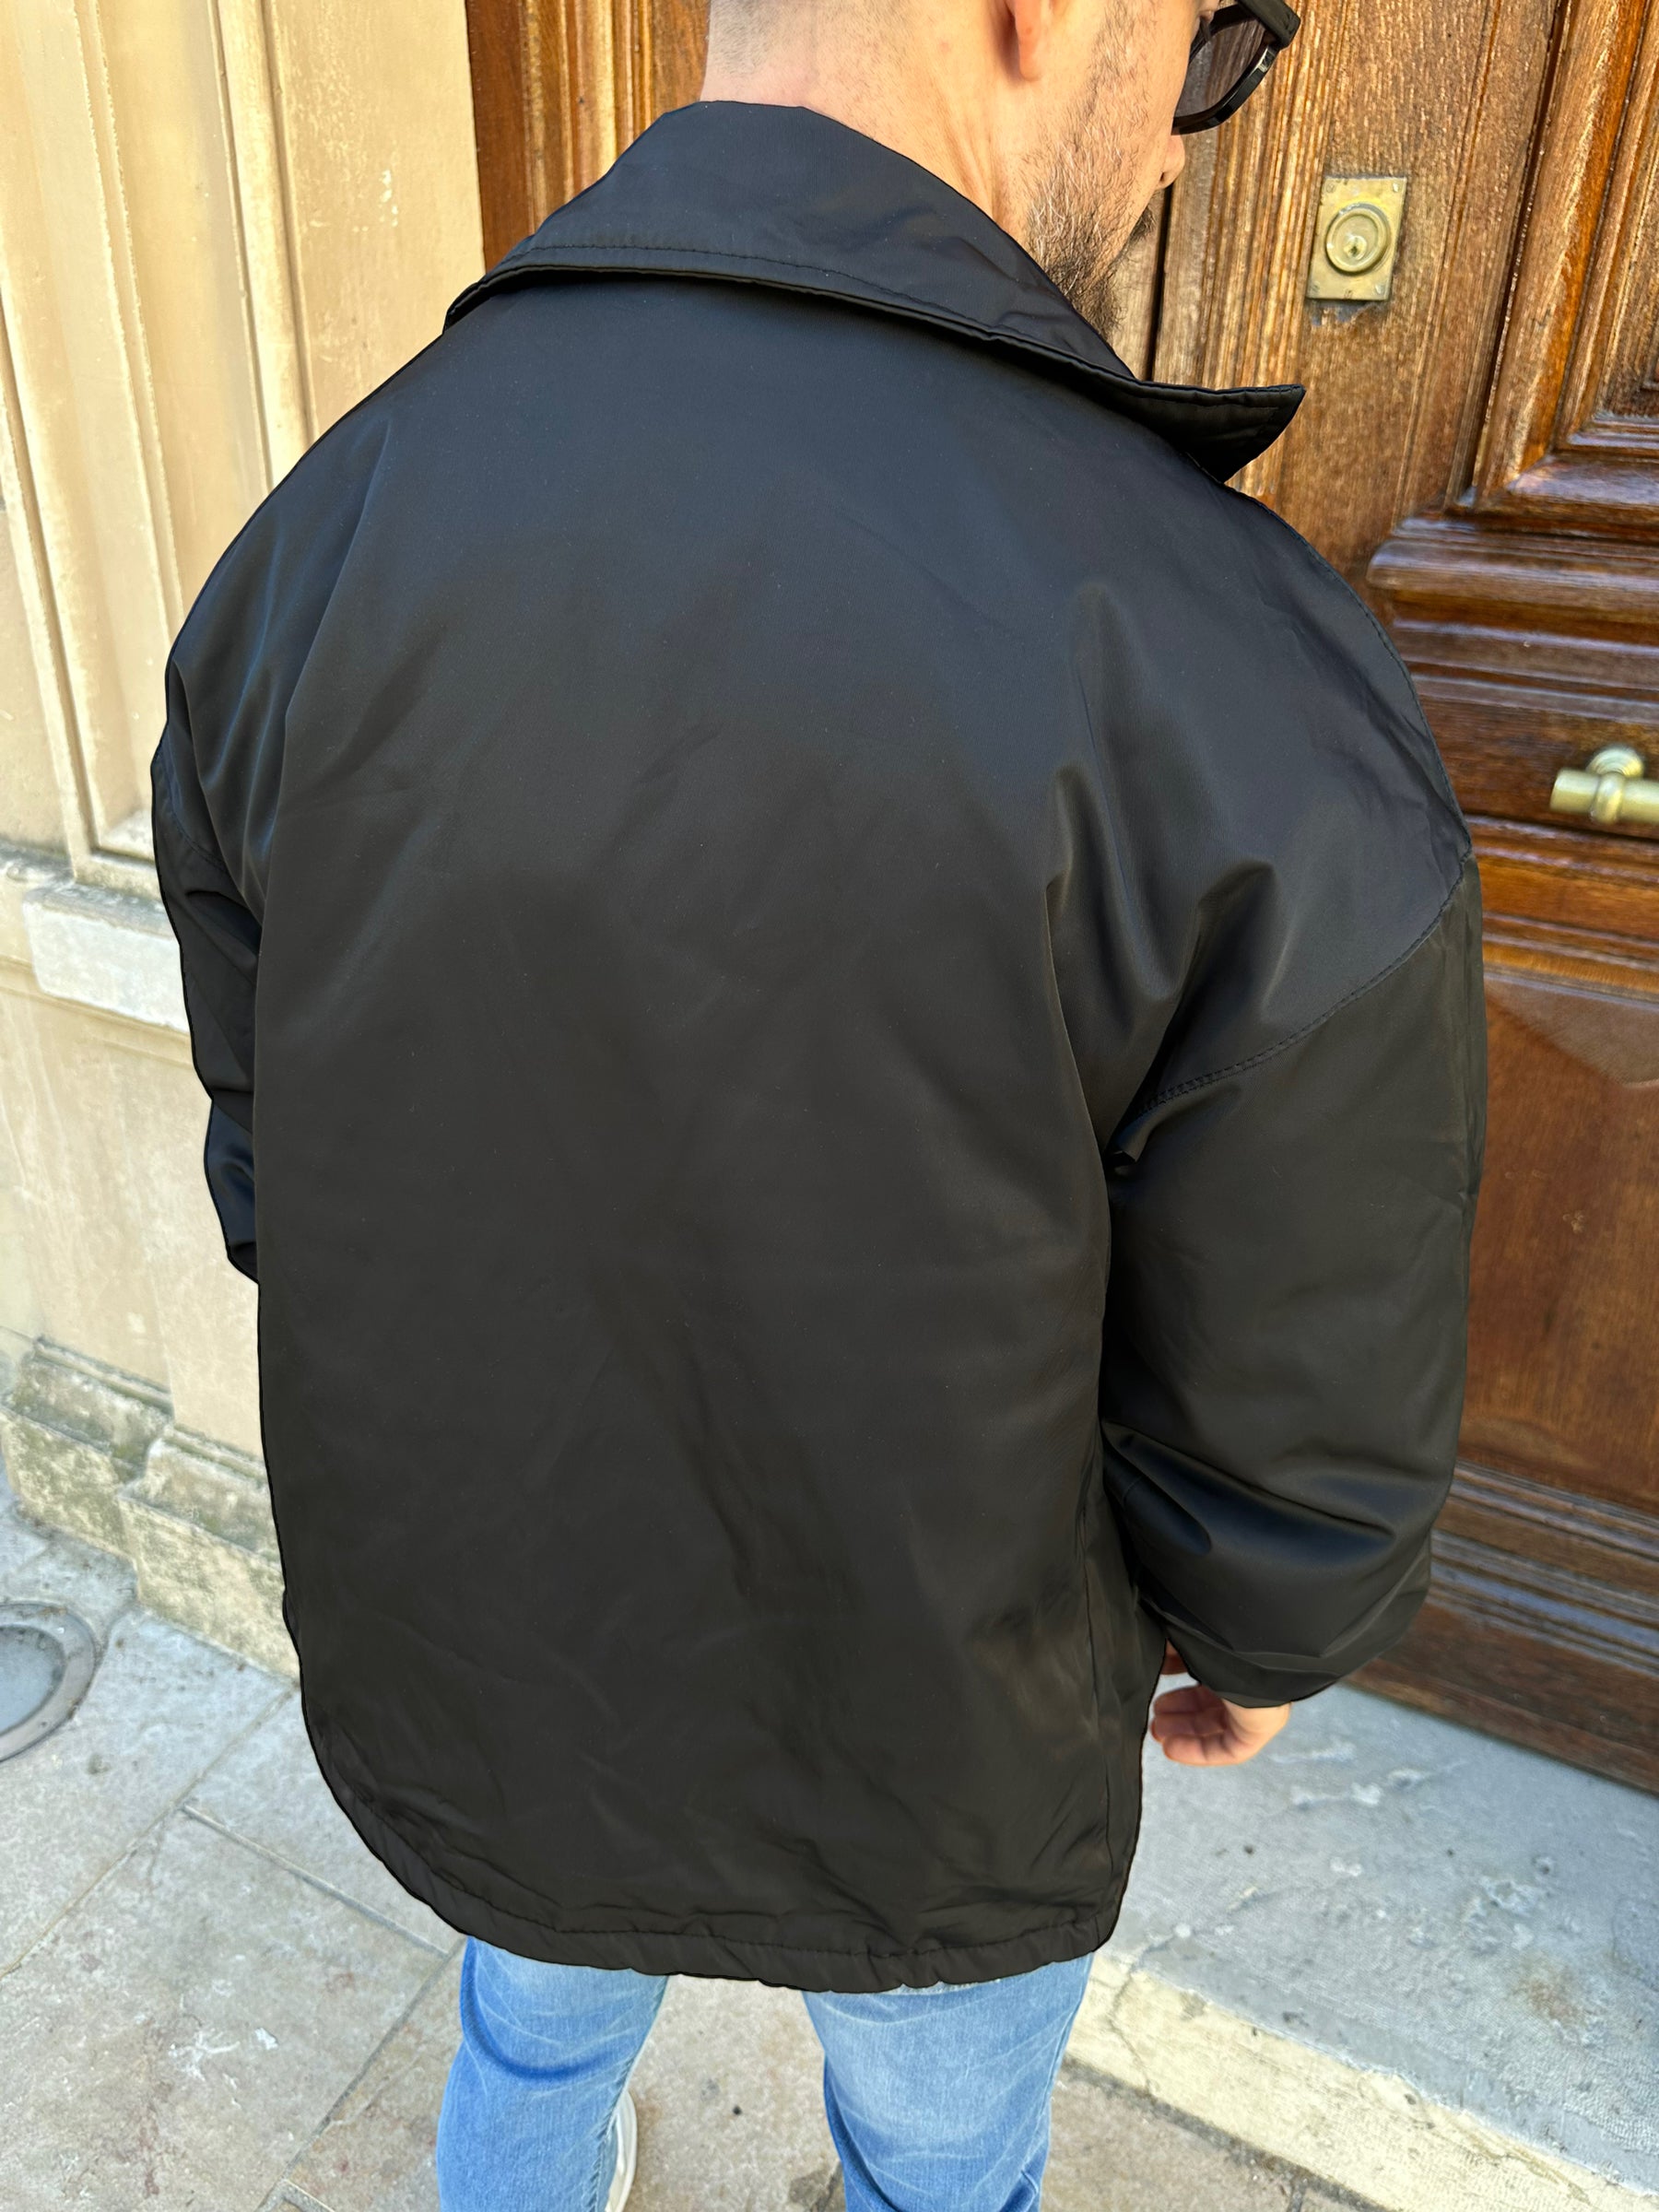 Black J jacket